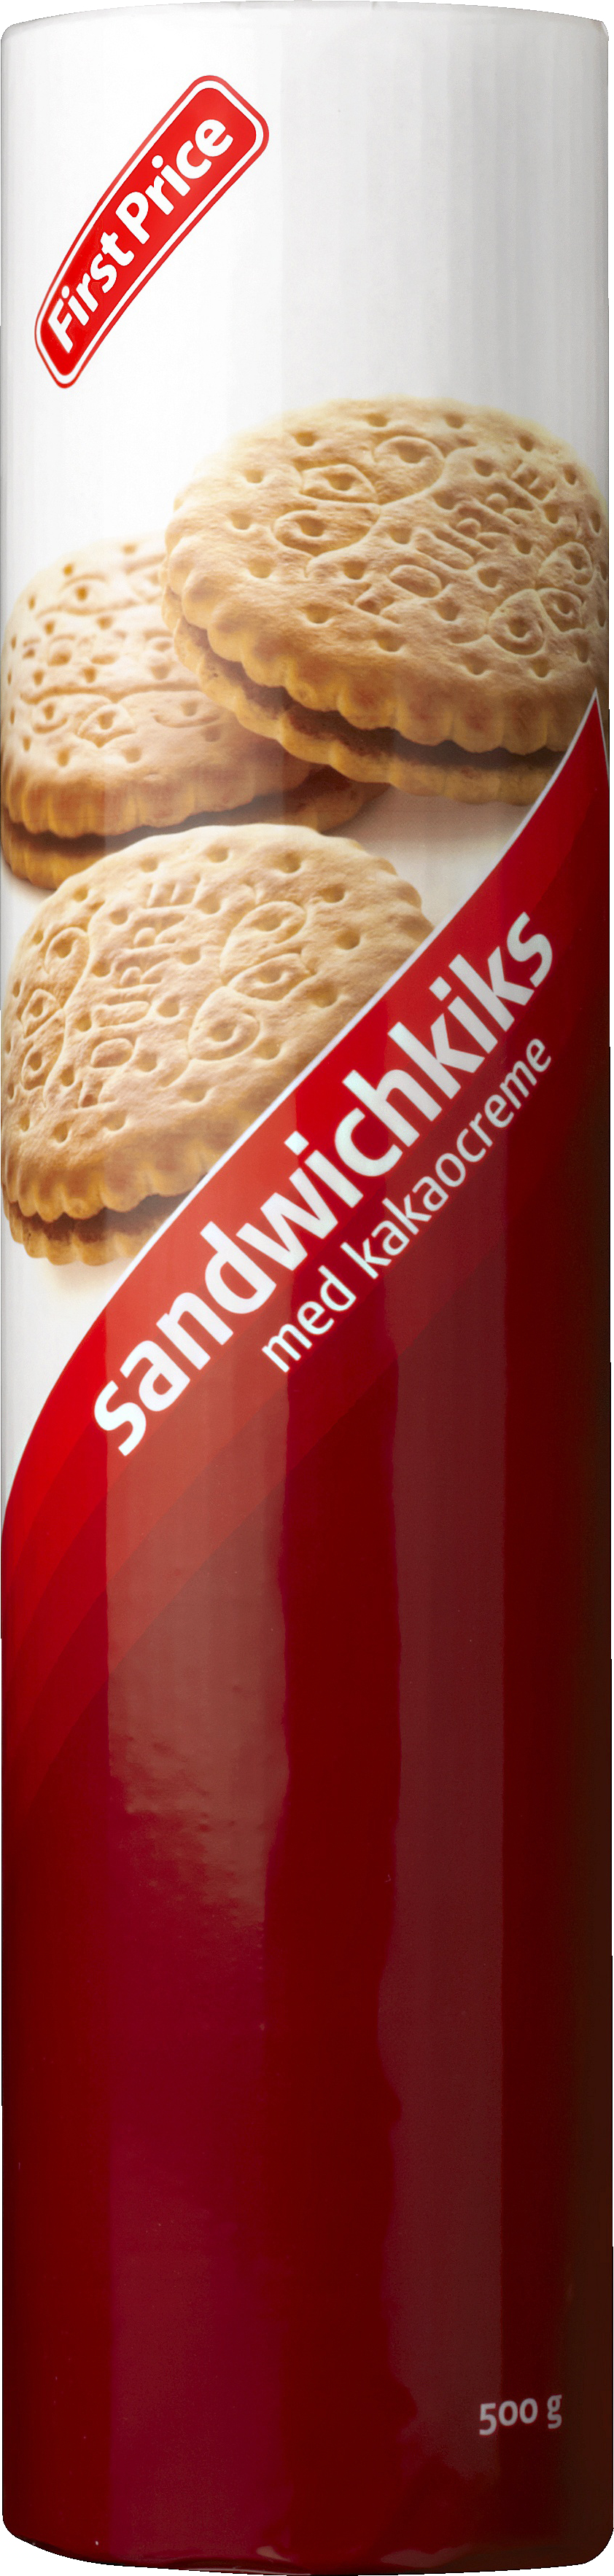 Price Sandwichkiks med Kakaocreme 500 g. - KIKS & SMÅKAGER VIN MED .DK